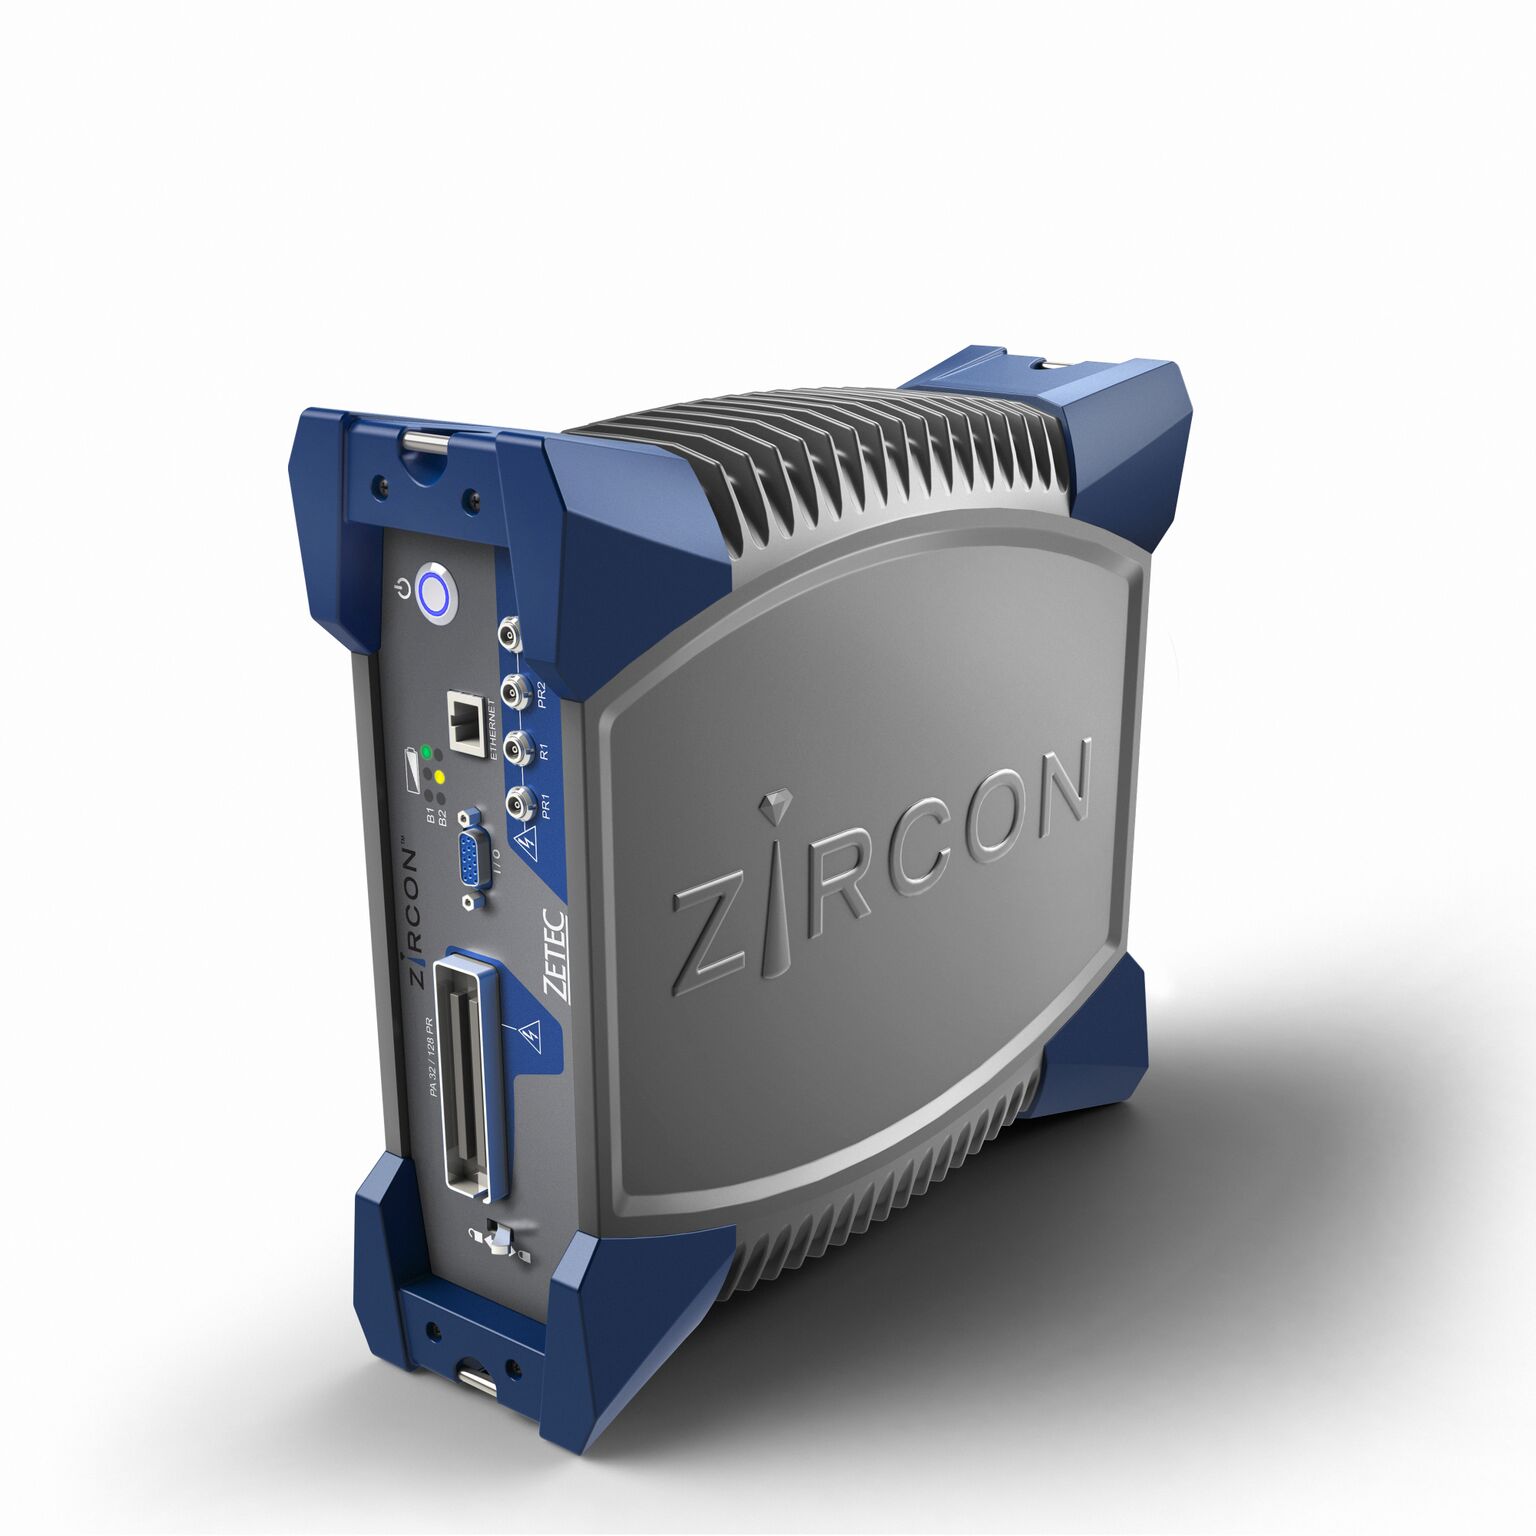 Zetec Zircon Portable High Performance Phased Array UT Instrument